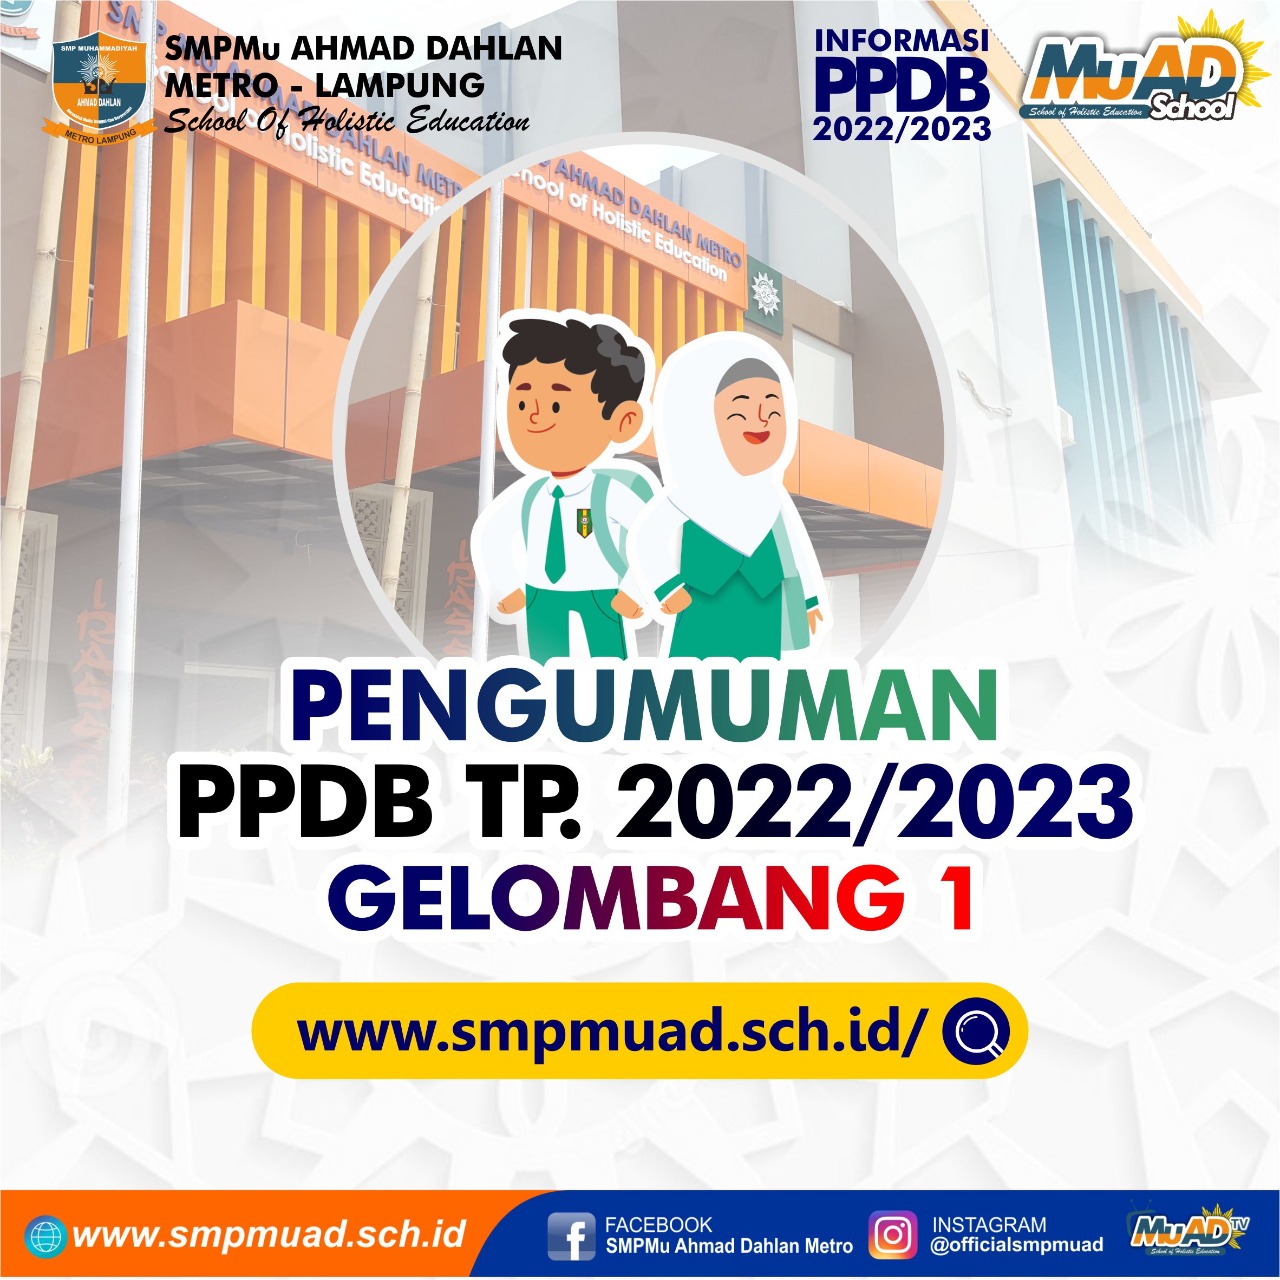 Pengumuman Hasil Seleksi PPDB Gelombang 1 TP 2022 2023